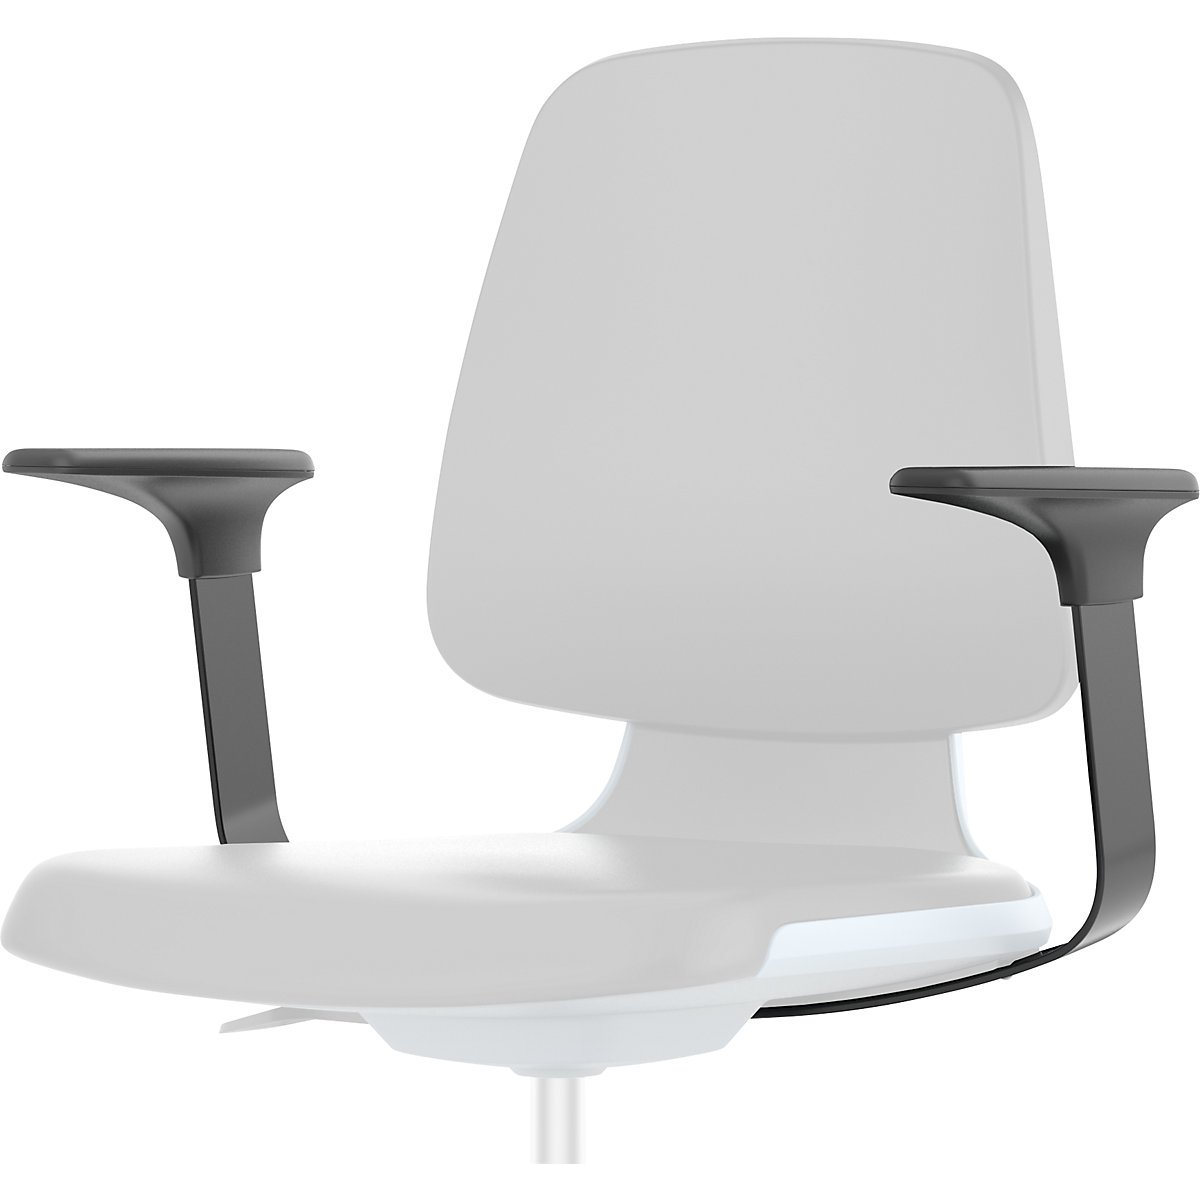 Arm rests, 1 pair – bimos, for LABSIT industrial swivel chair, black